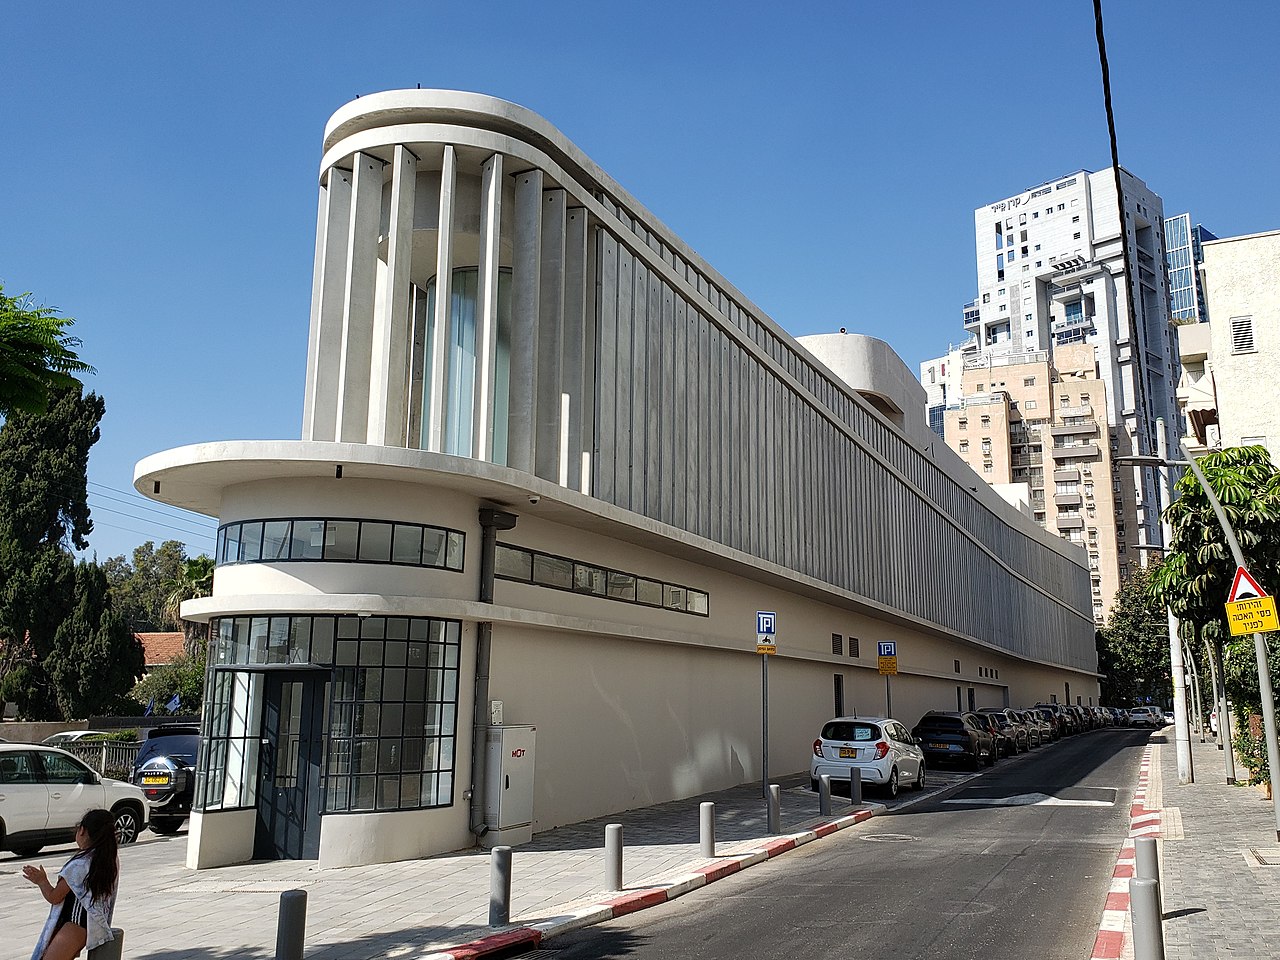 The Ramat Gan Museum of Israeli Art